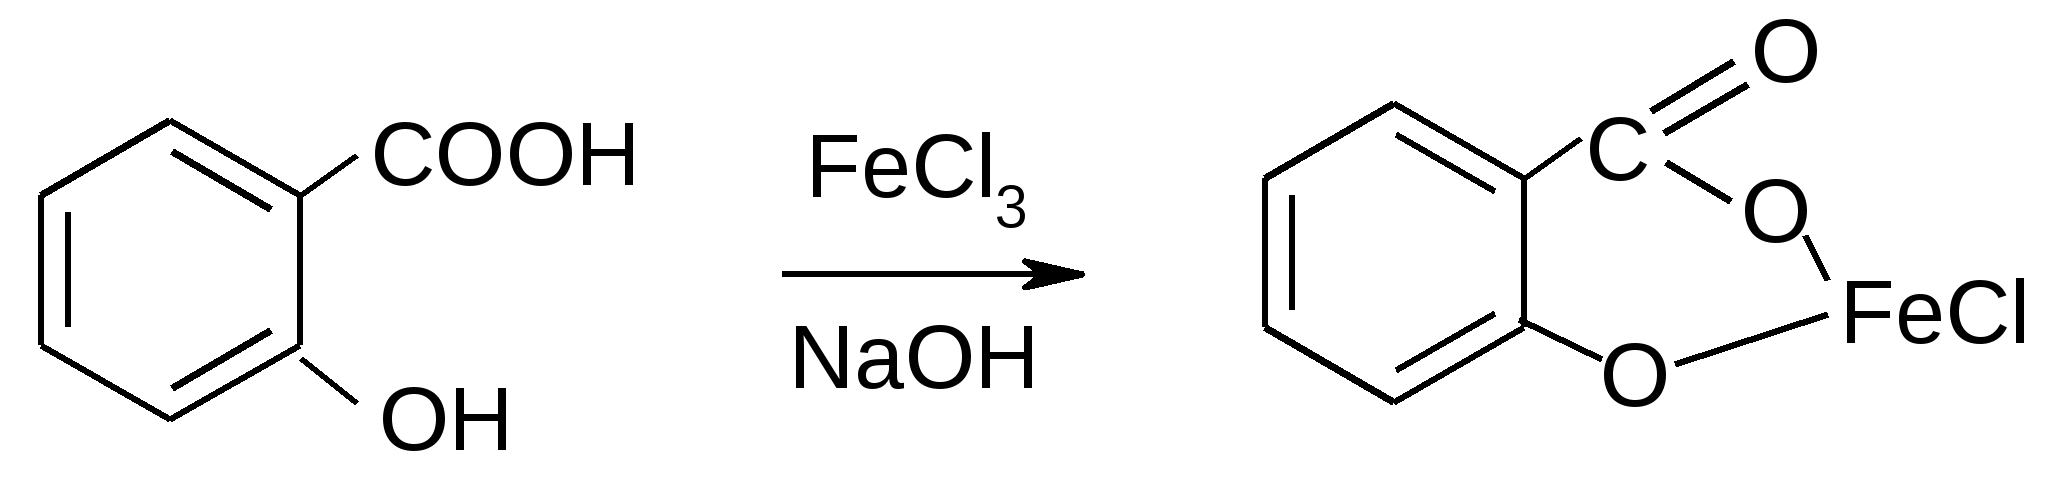 Салициловая кислота NAOH. Салициловая кислота и гидроксид натрия. Салициловая кислота + хлорное железо реакция. Салициловая кислота и щелочь реакция. Уксусная кислота и железо 3